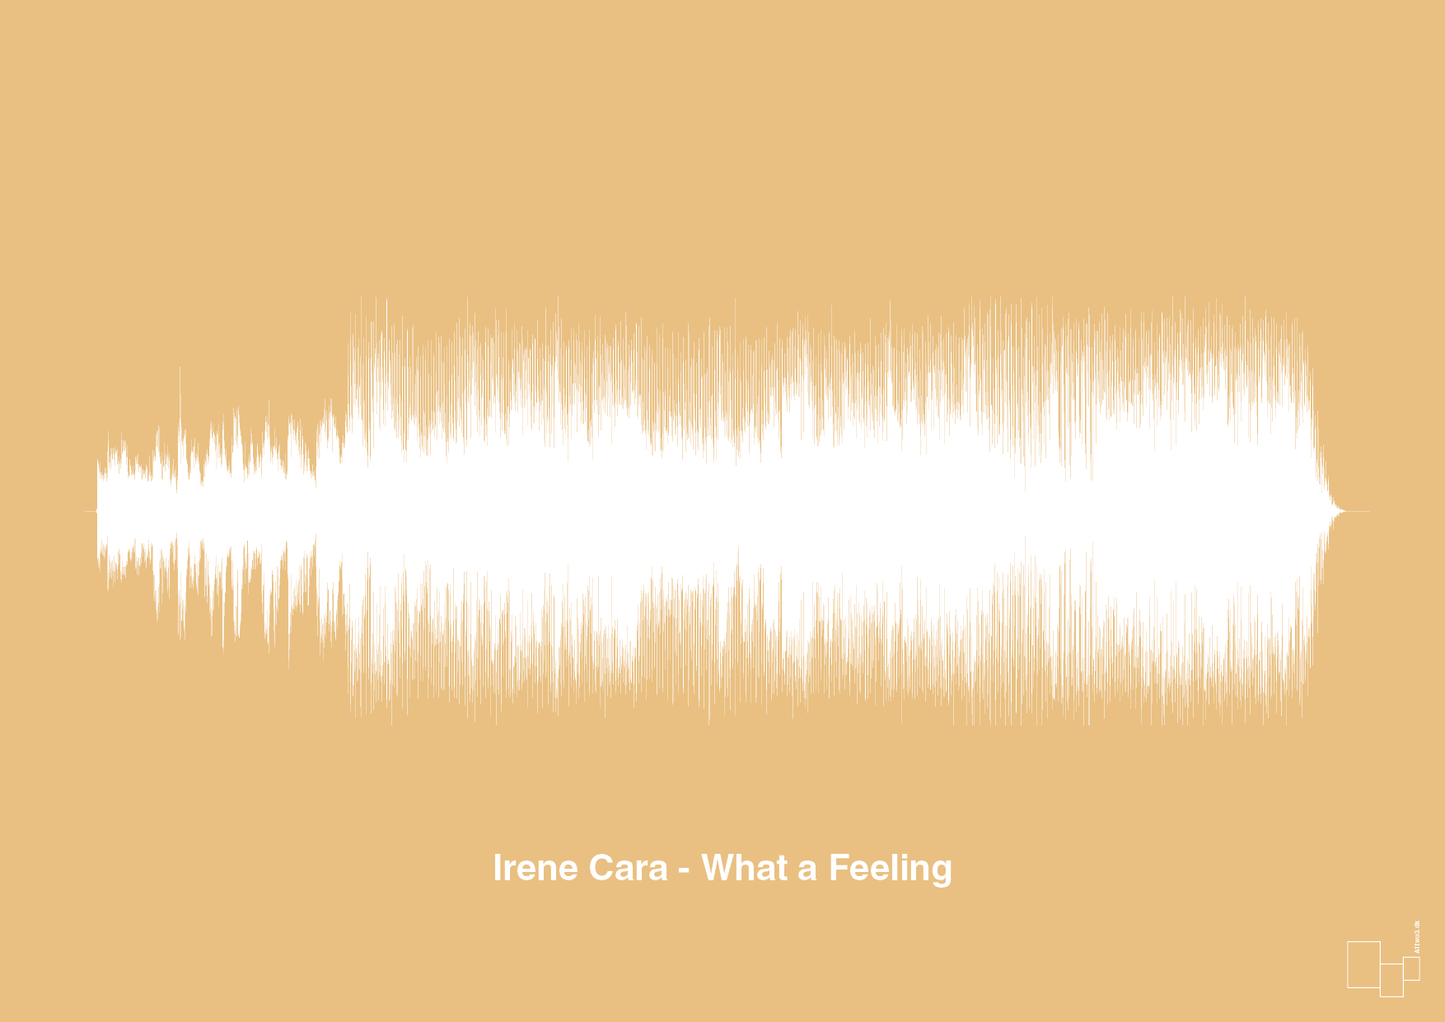 irene cara - what a feeling - Plakat med Musik i Charismatic